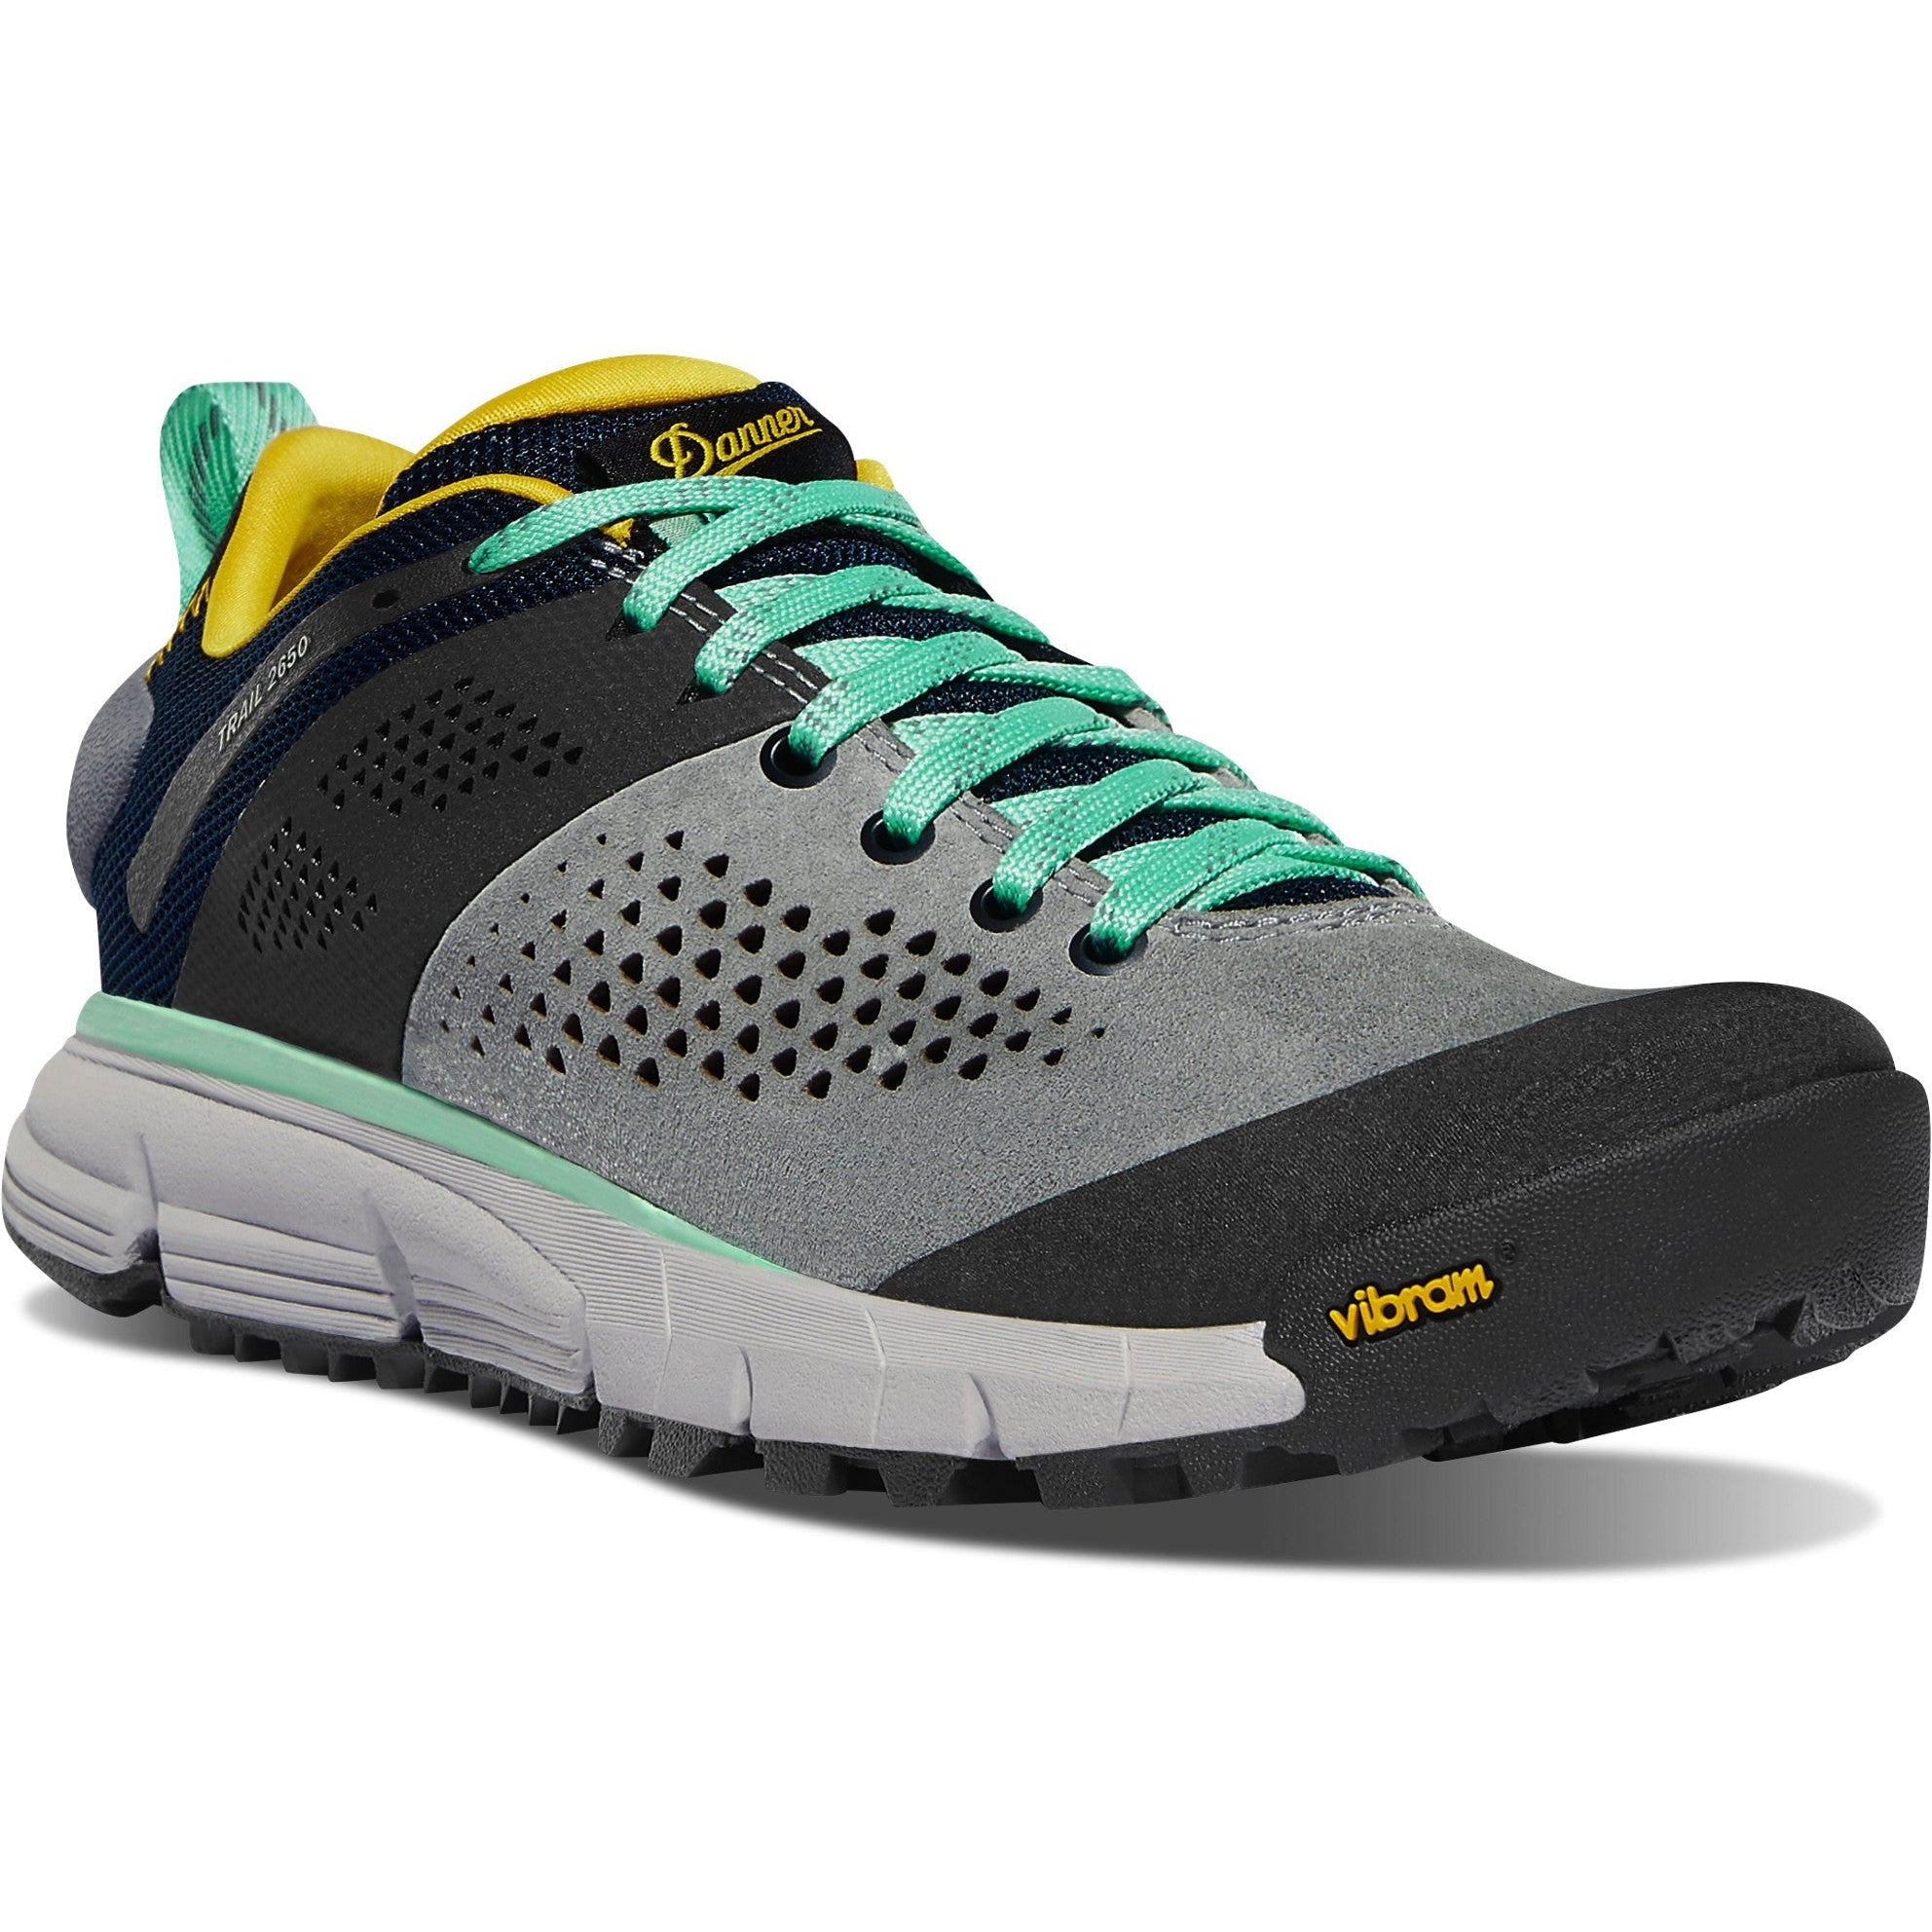 Danner Women's Trail 2650 3" Hiker Shoe - Gray/Blue - 61283 5 / Medium / Gray - Overlook Boots